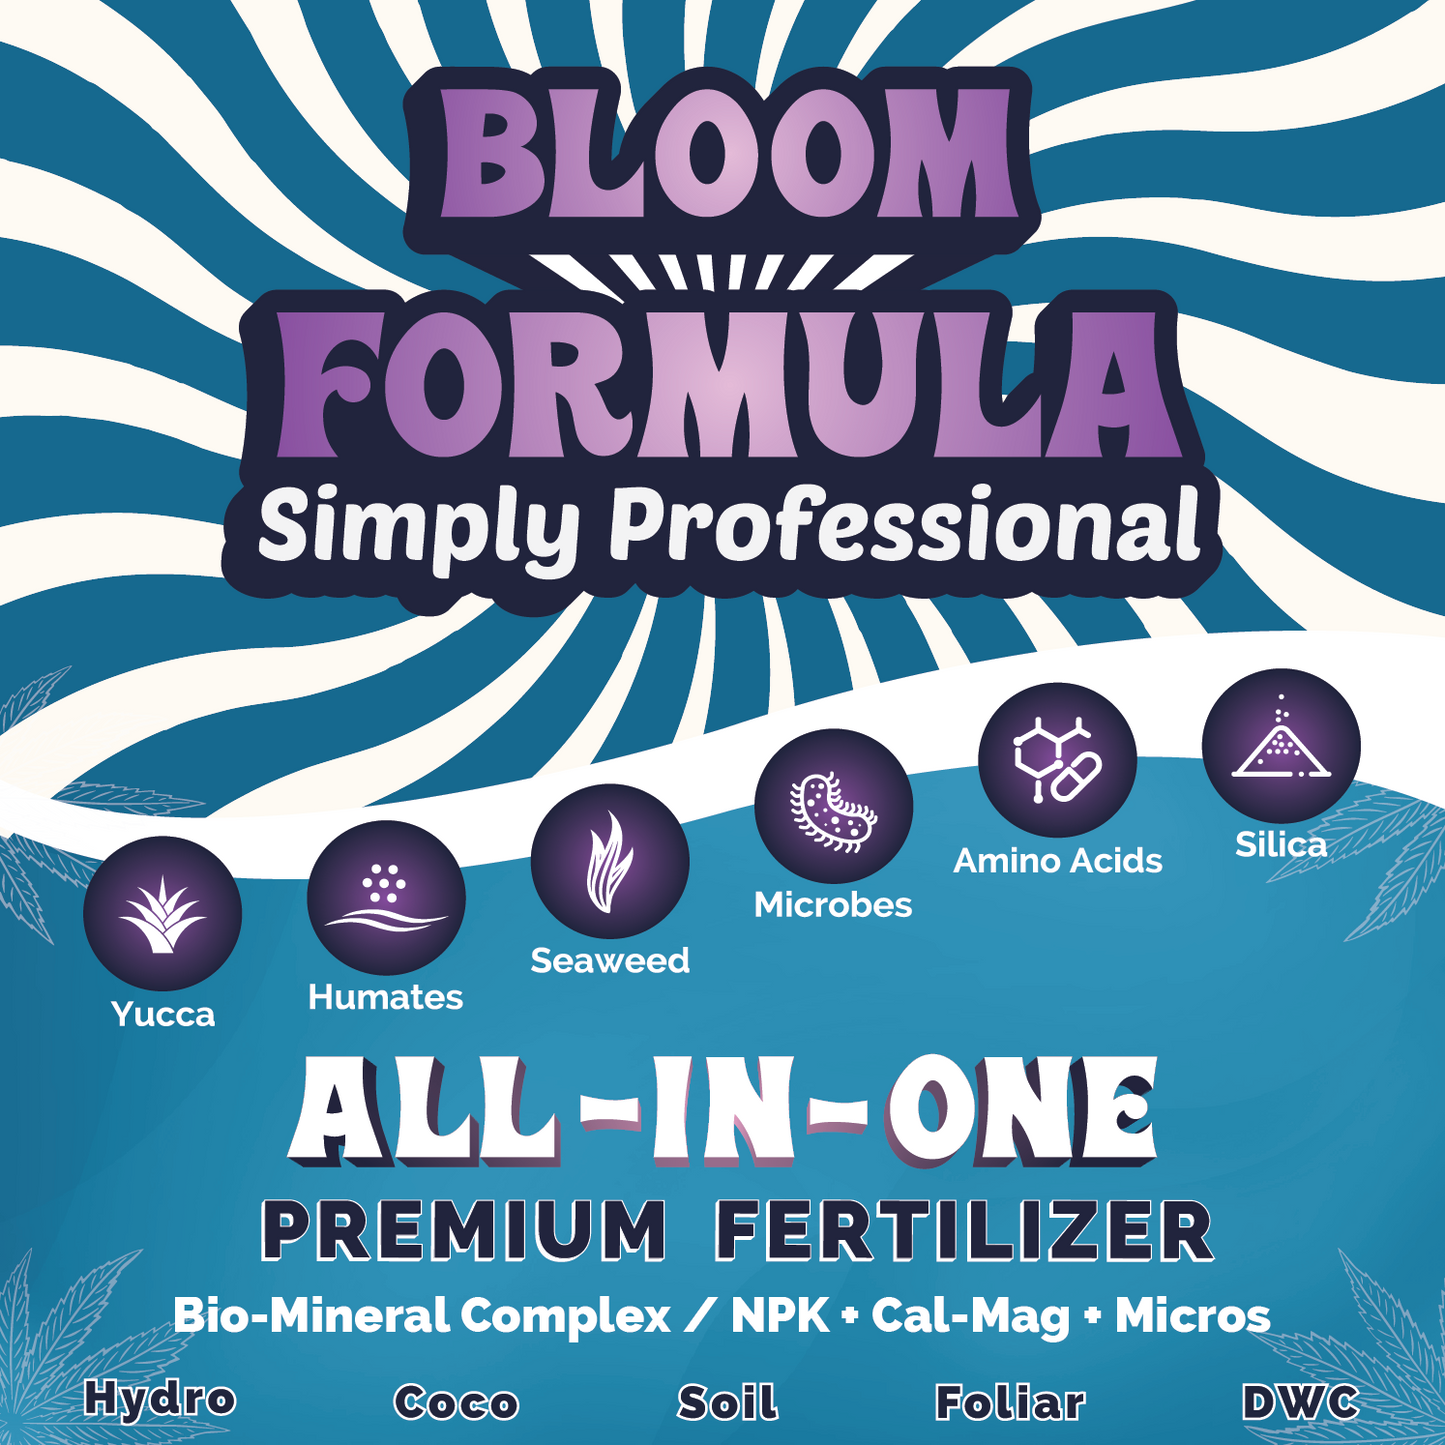 Simply Professional Bloom Formula